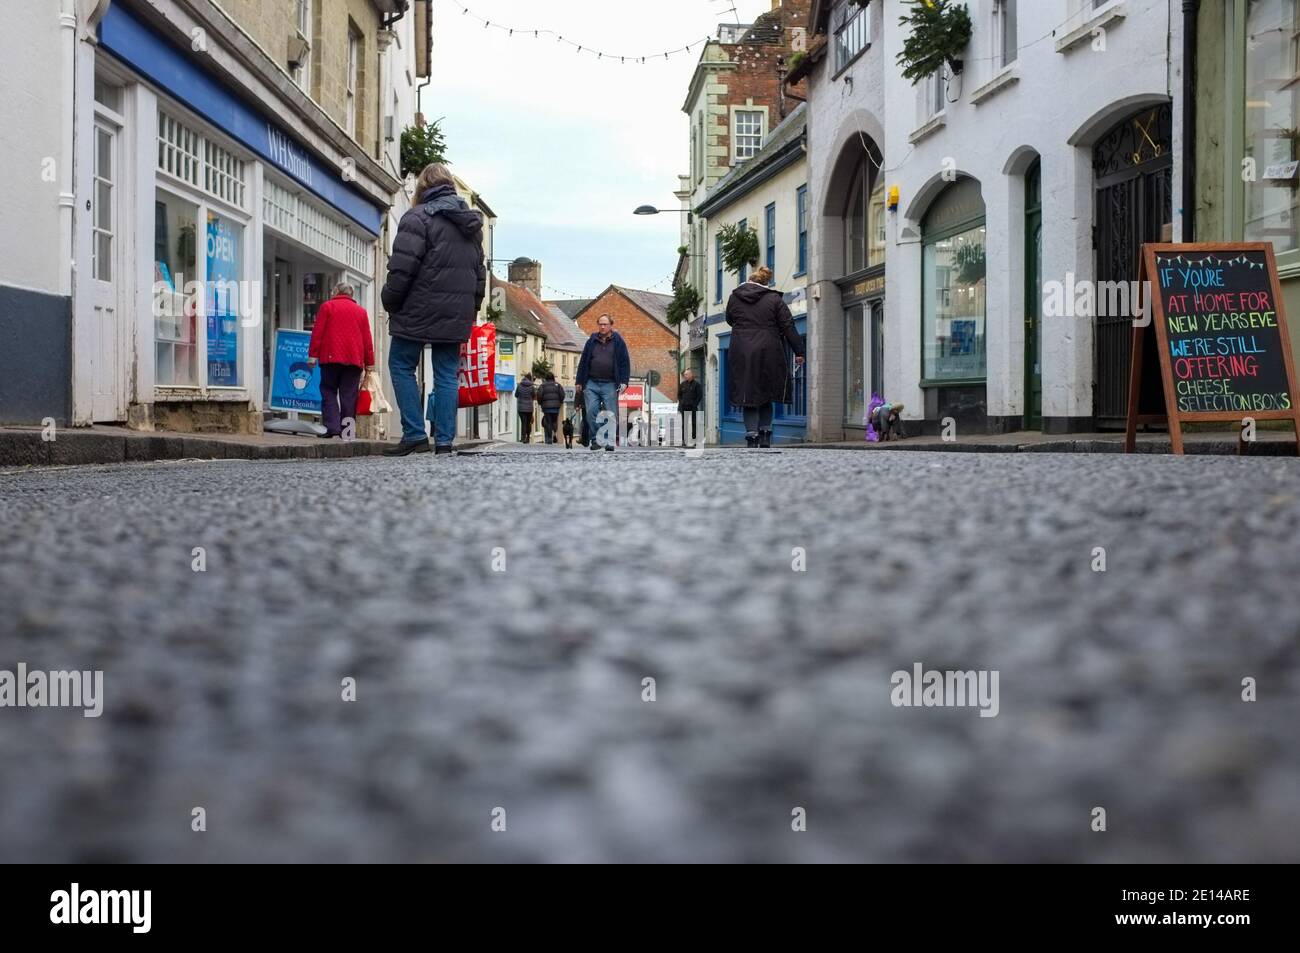 The High Street in Shaftesbury, Dorset, UK. 2020. Stock Photo